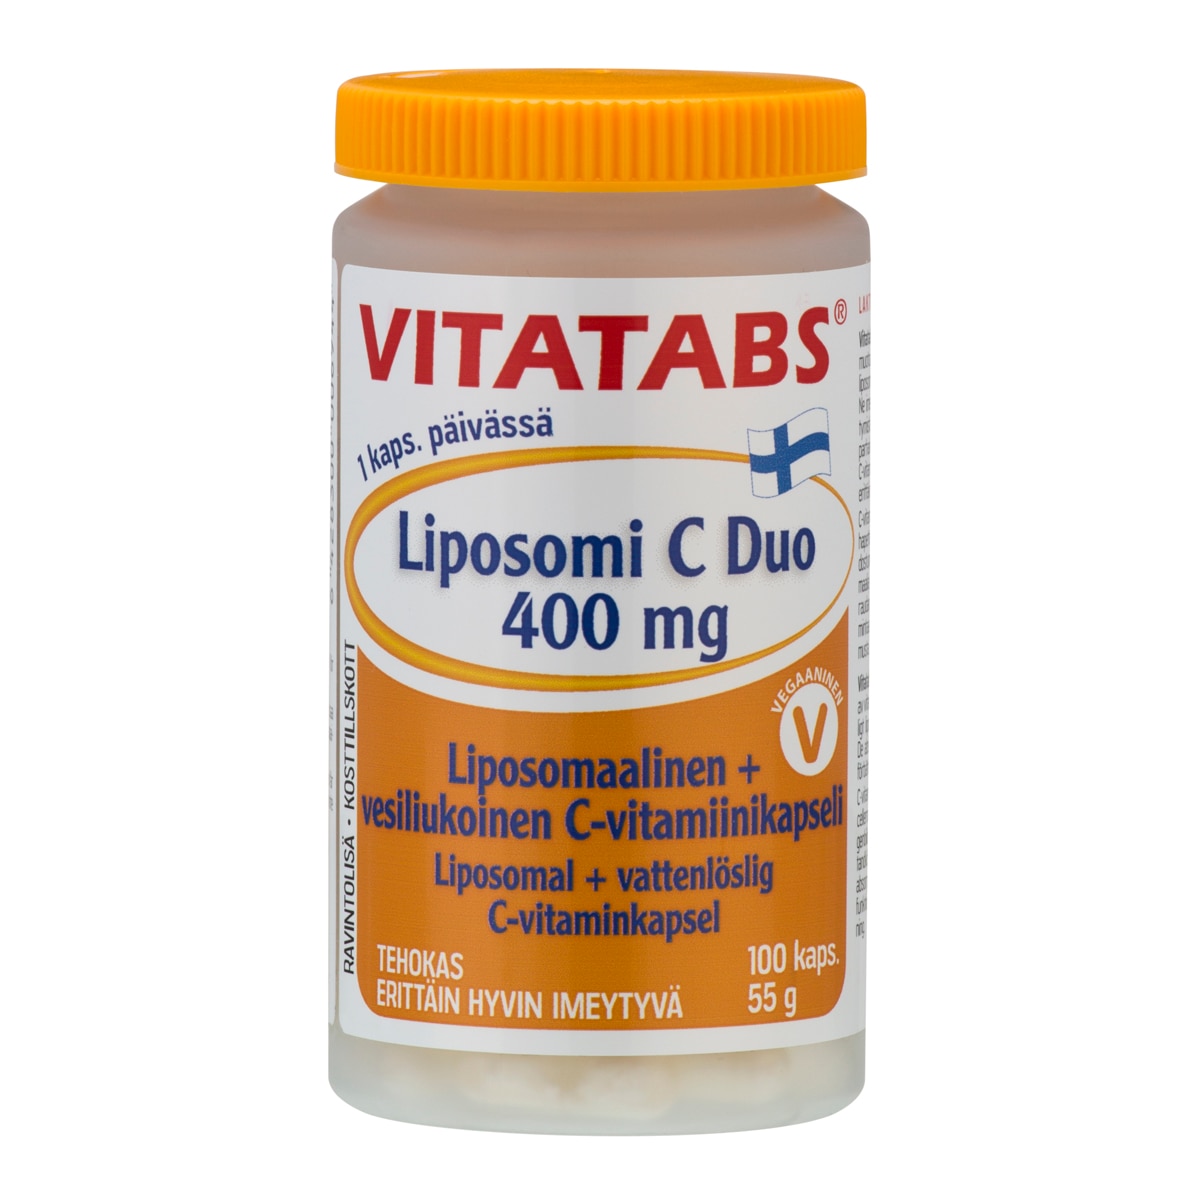 Vitatabs Liposomi C Duo 400 mg 100 cap